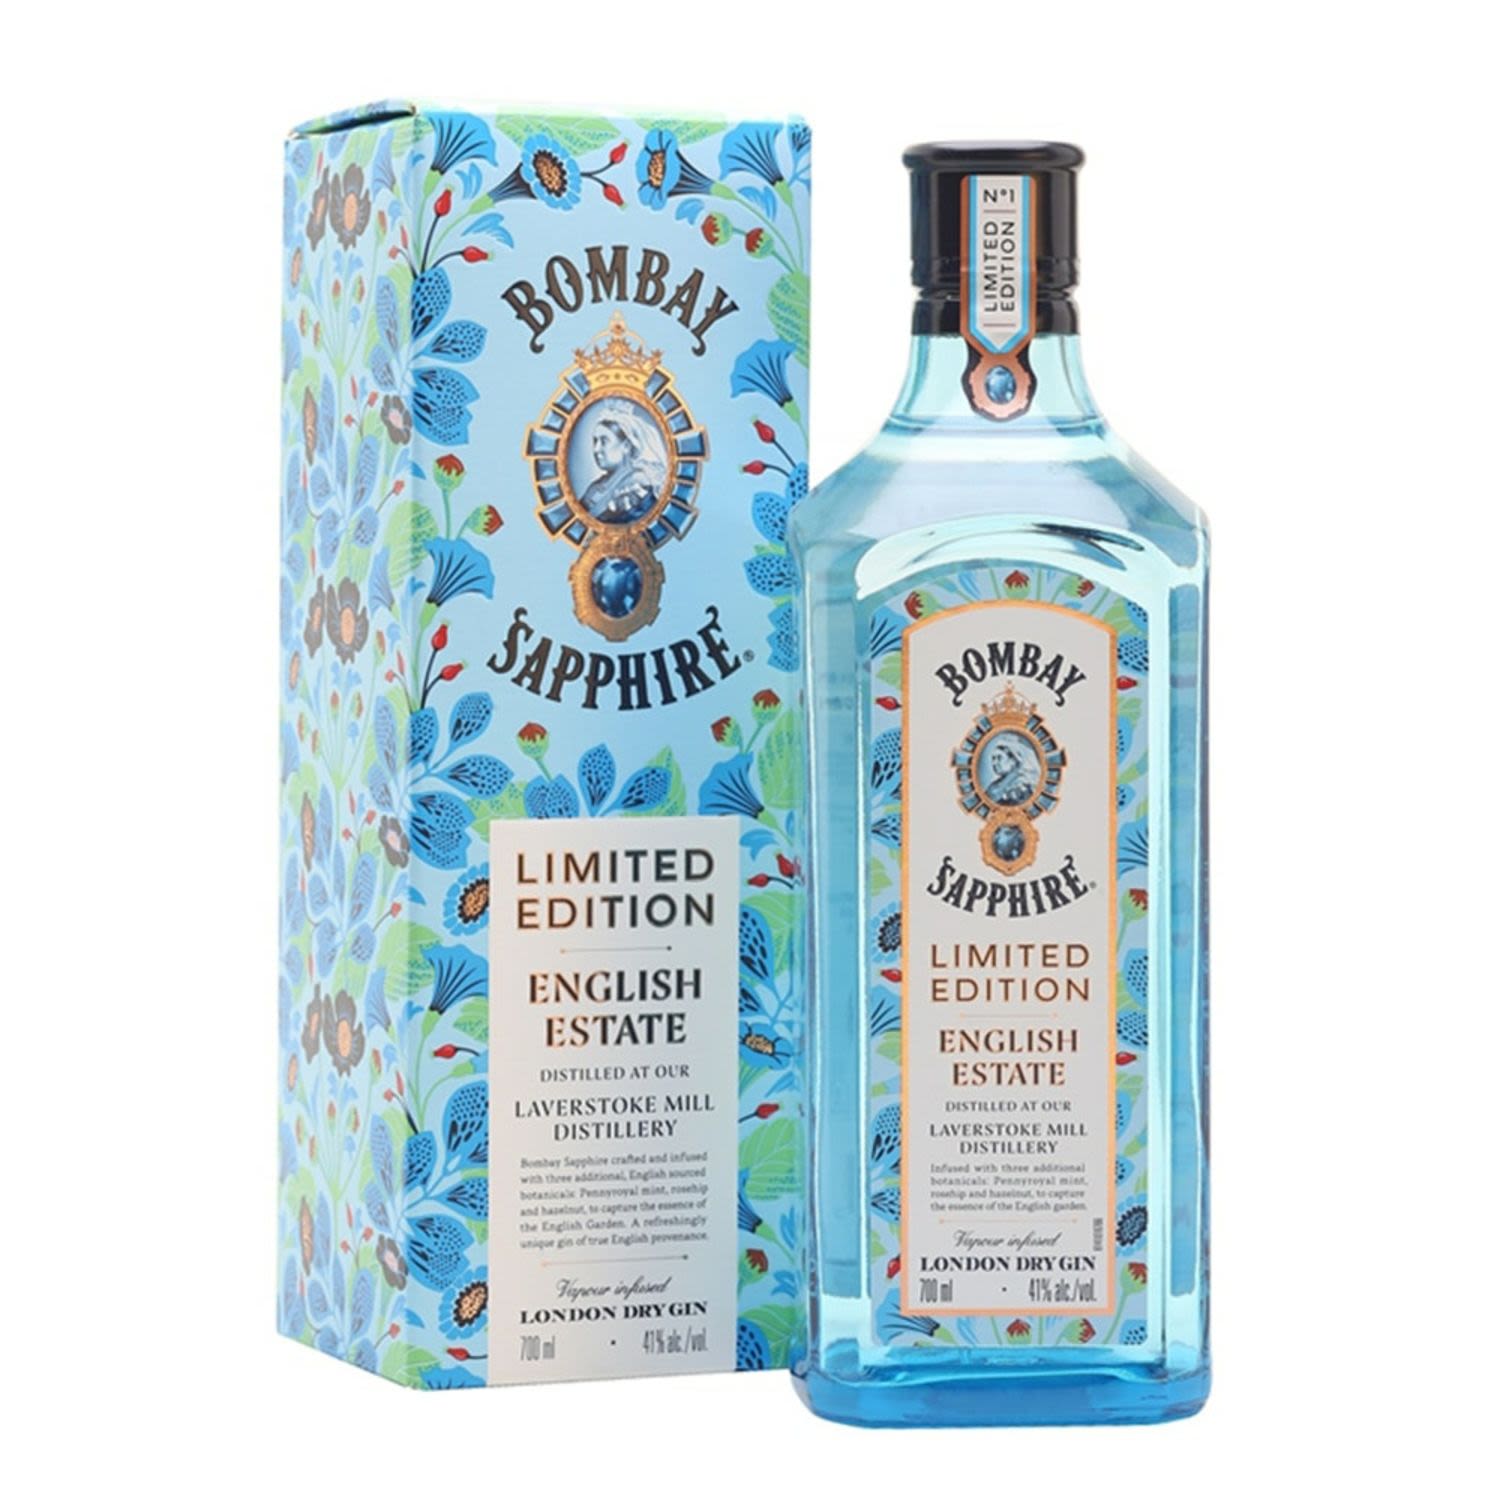 Bombay Sapphire English Estate Gin Gift Box 700mL Bottle